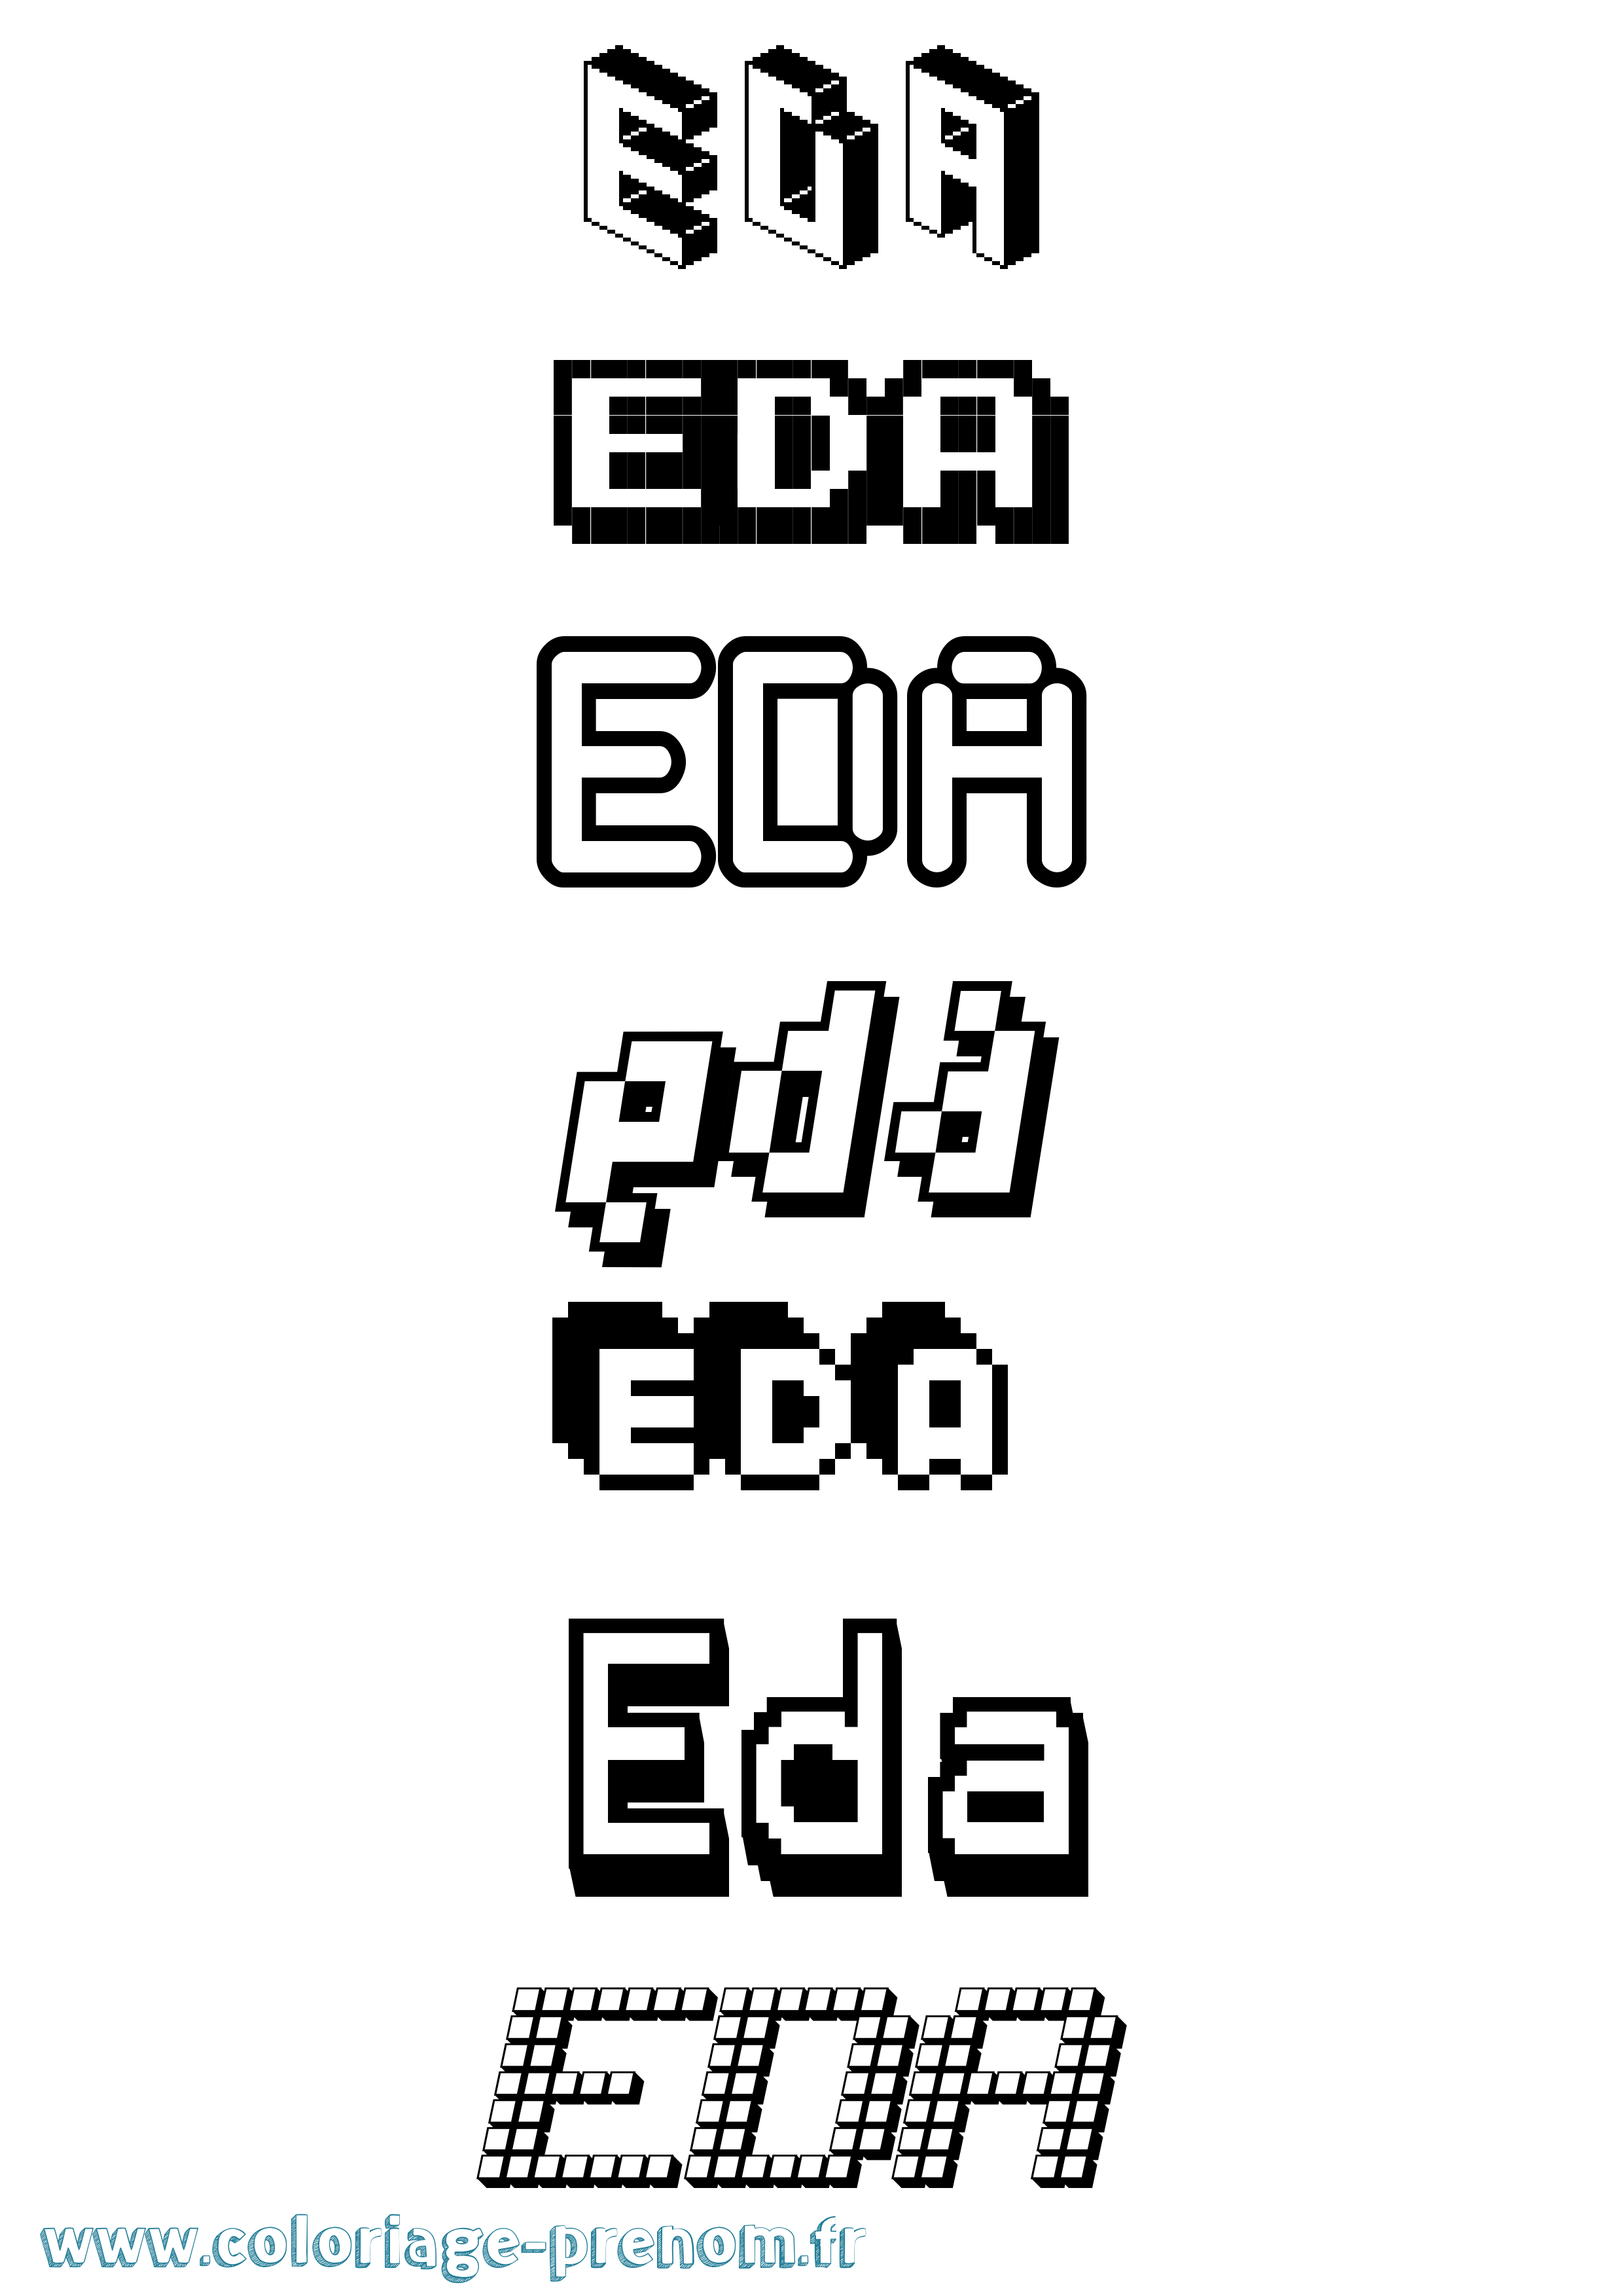 Coloriage prénom Eda Pixel